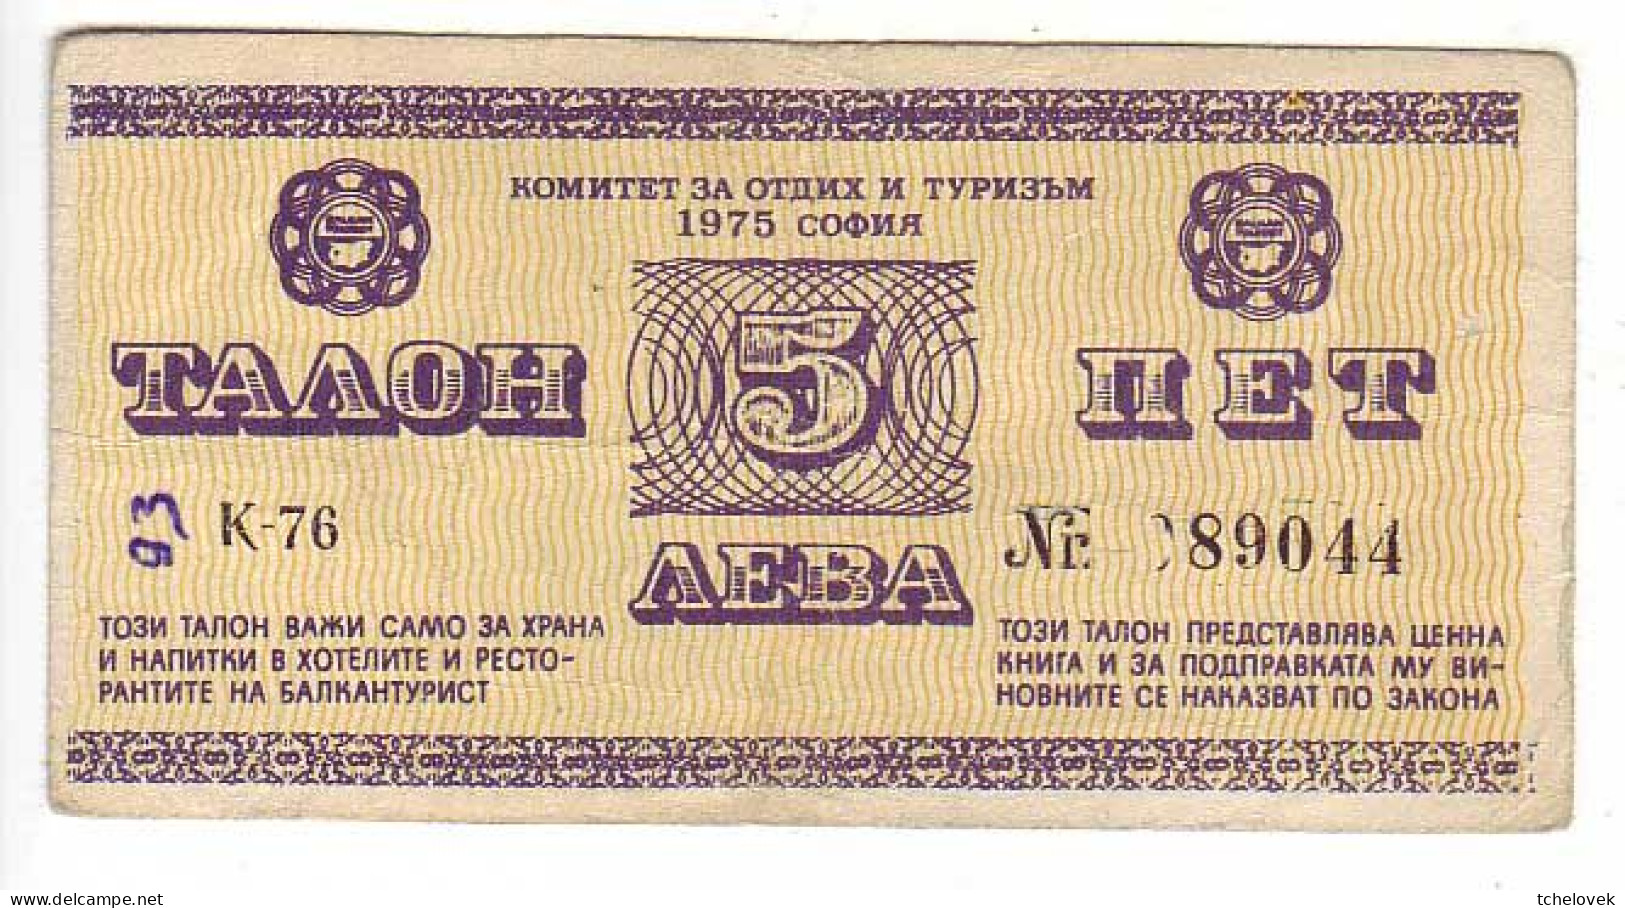 (Billets). Bulgarie Bulgaria. Foreing Exchange Certificate. Rare. Balkan Tourist. 1975. 5 Leva Serie K-76 N° 089044 - Bulgaria